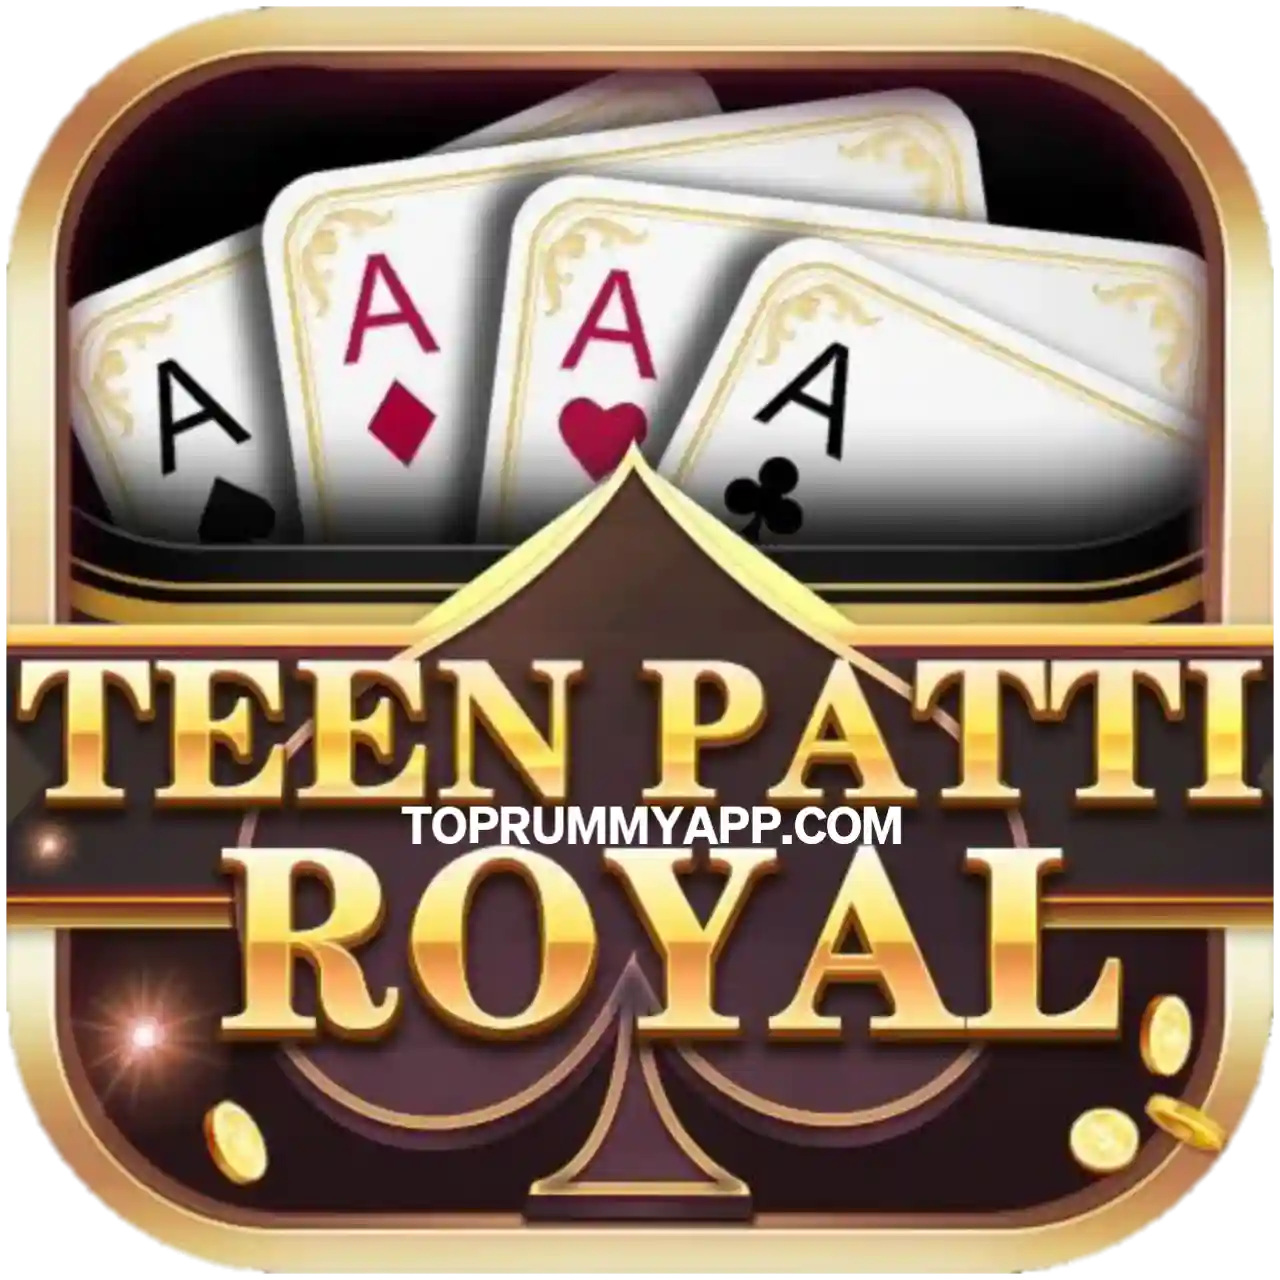 Teen Patti Royal App Download Top Teen Patti App List ₹51 Bonus